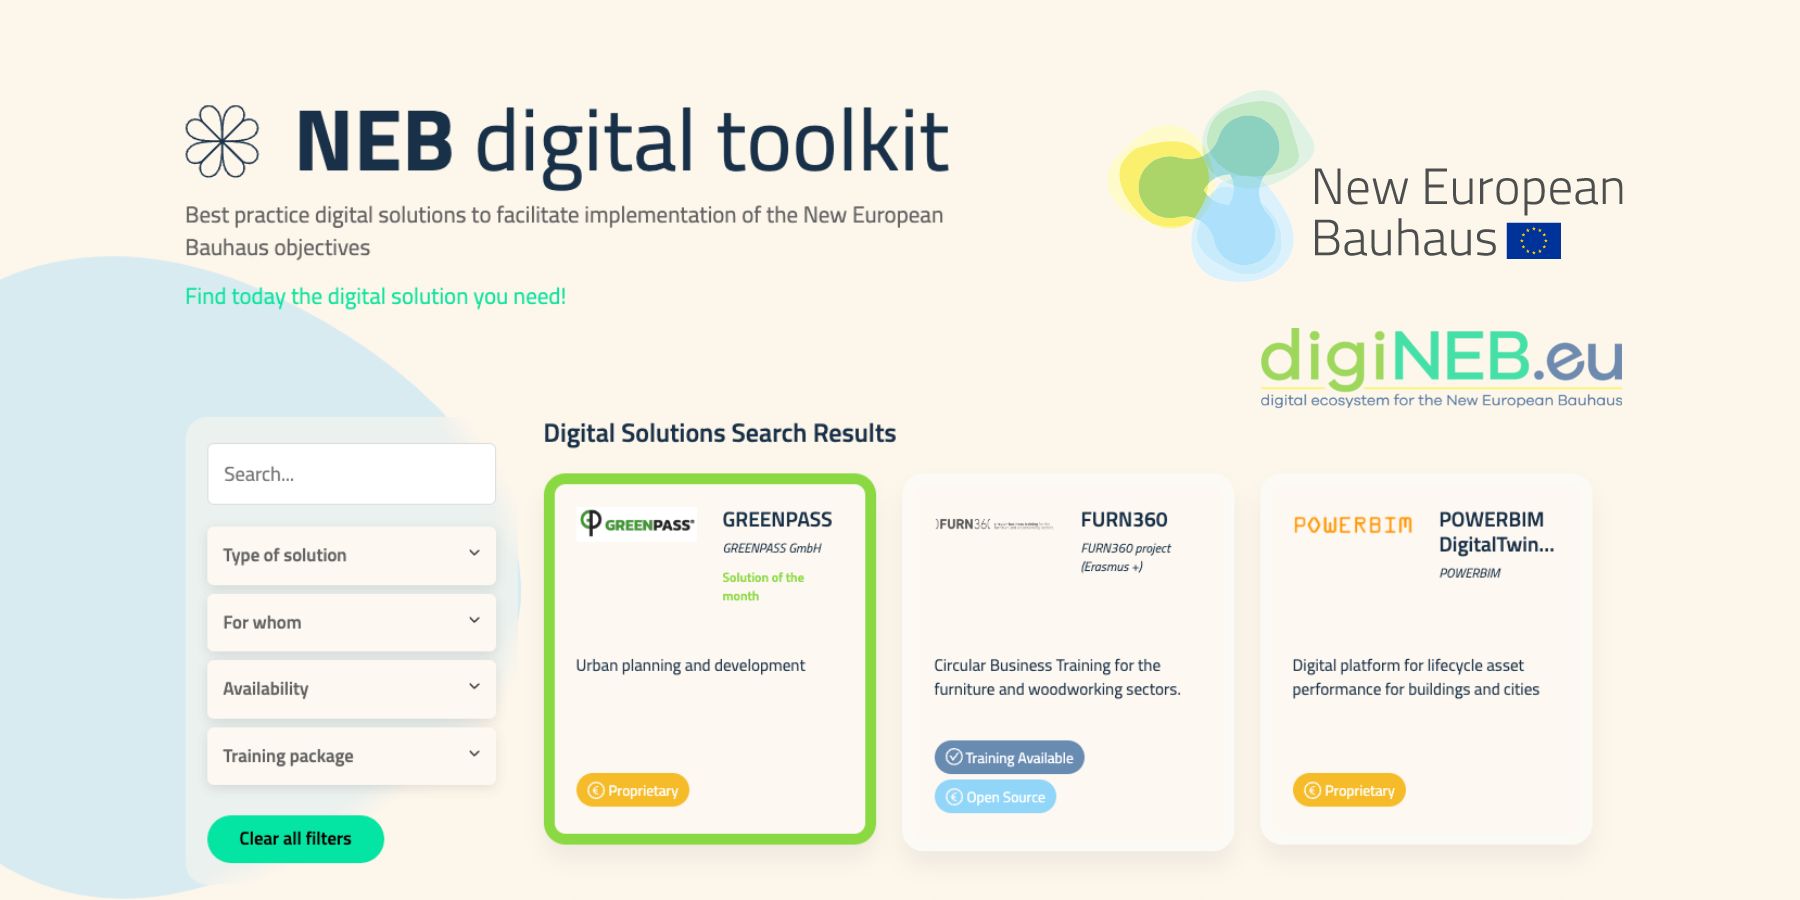 The NEB Digital Toolkit